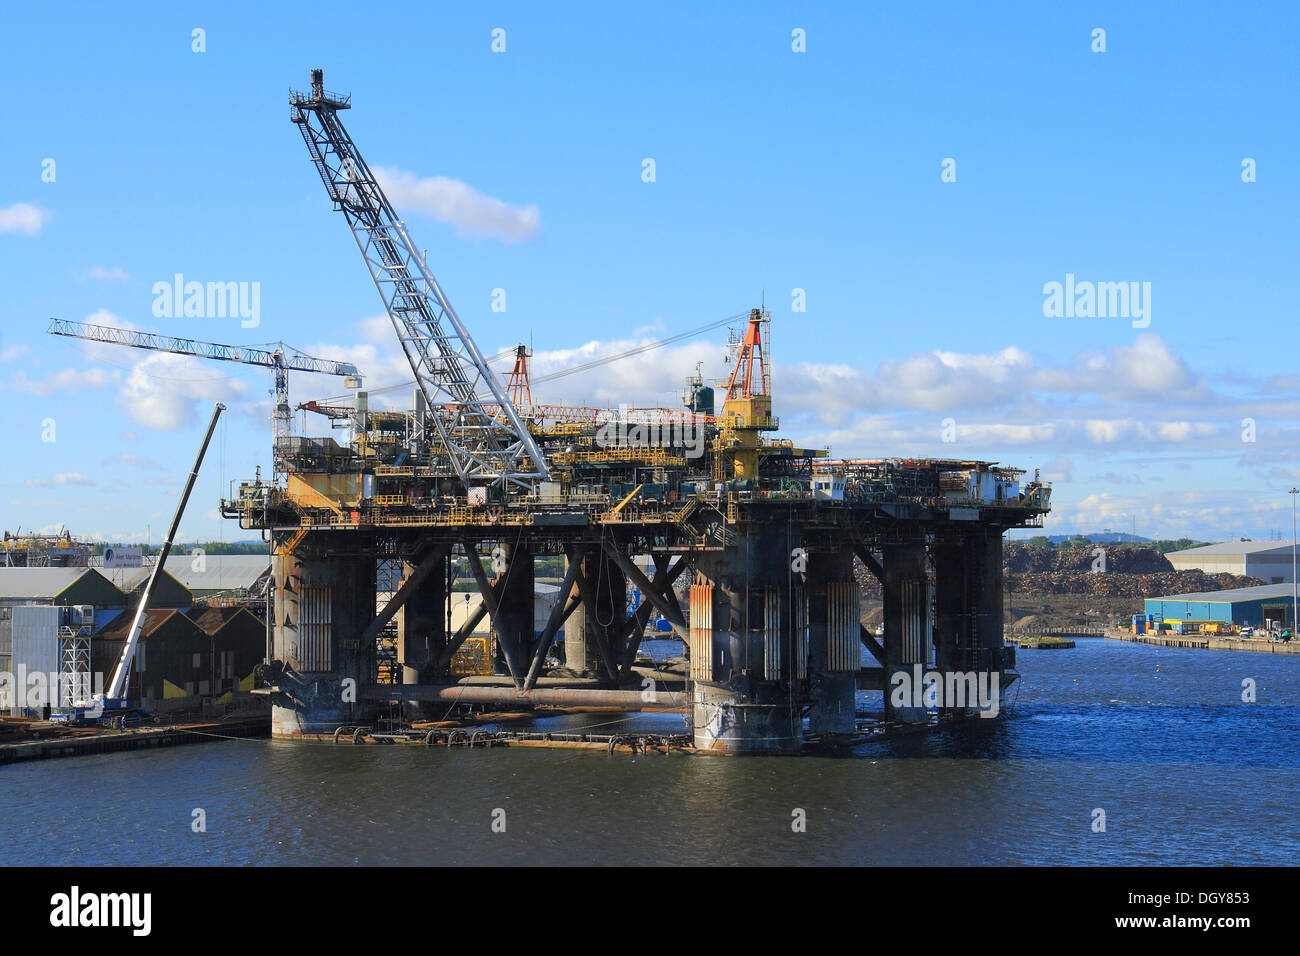 Oil rig in the port, drilling platform, Newcastle, Scotland, United Kingdom, Europe Stock Photo